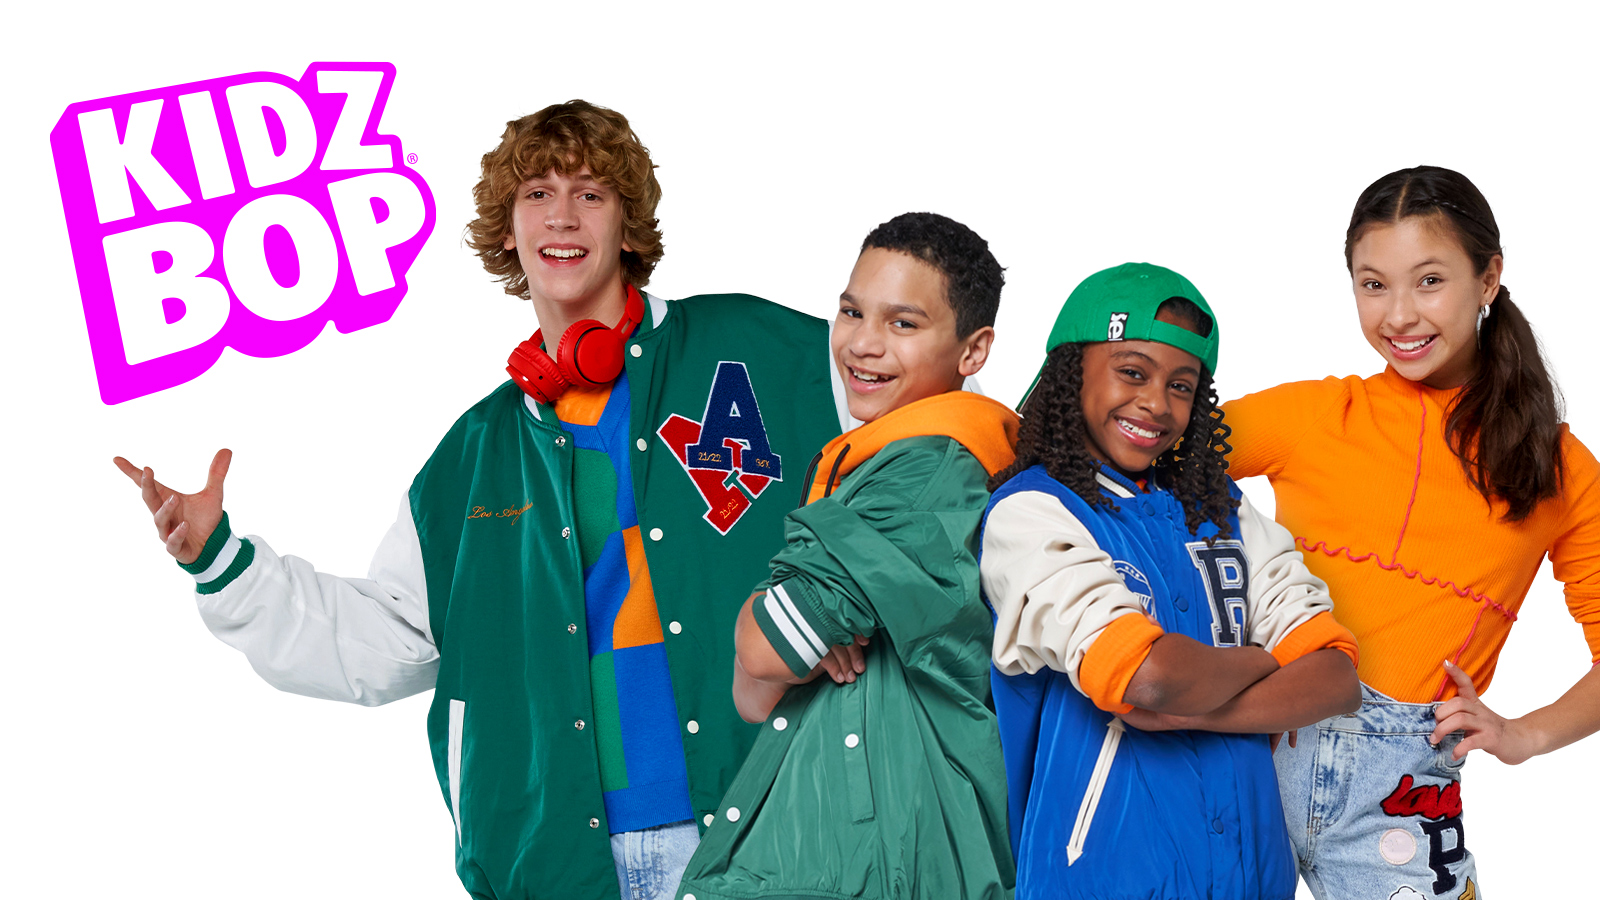 Image of Kidz Bop kids with Kidz Bop logo 